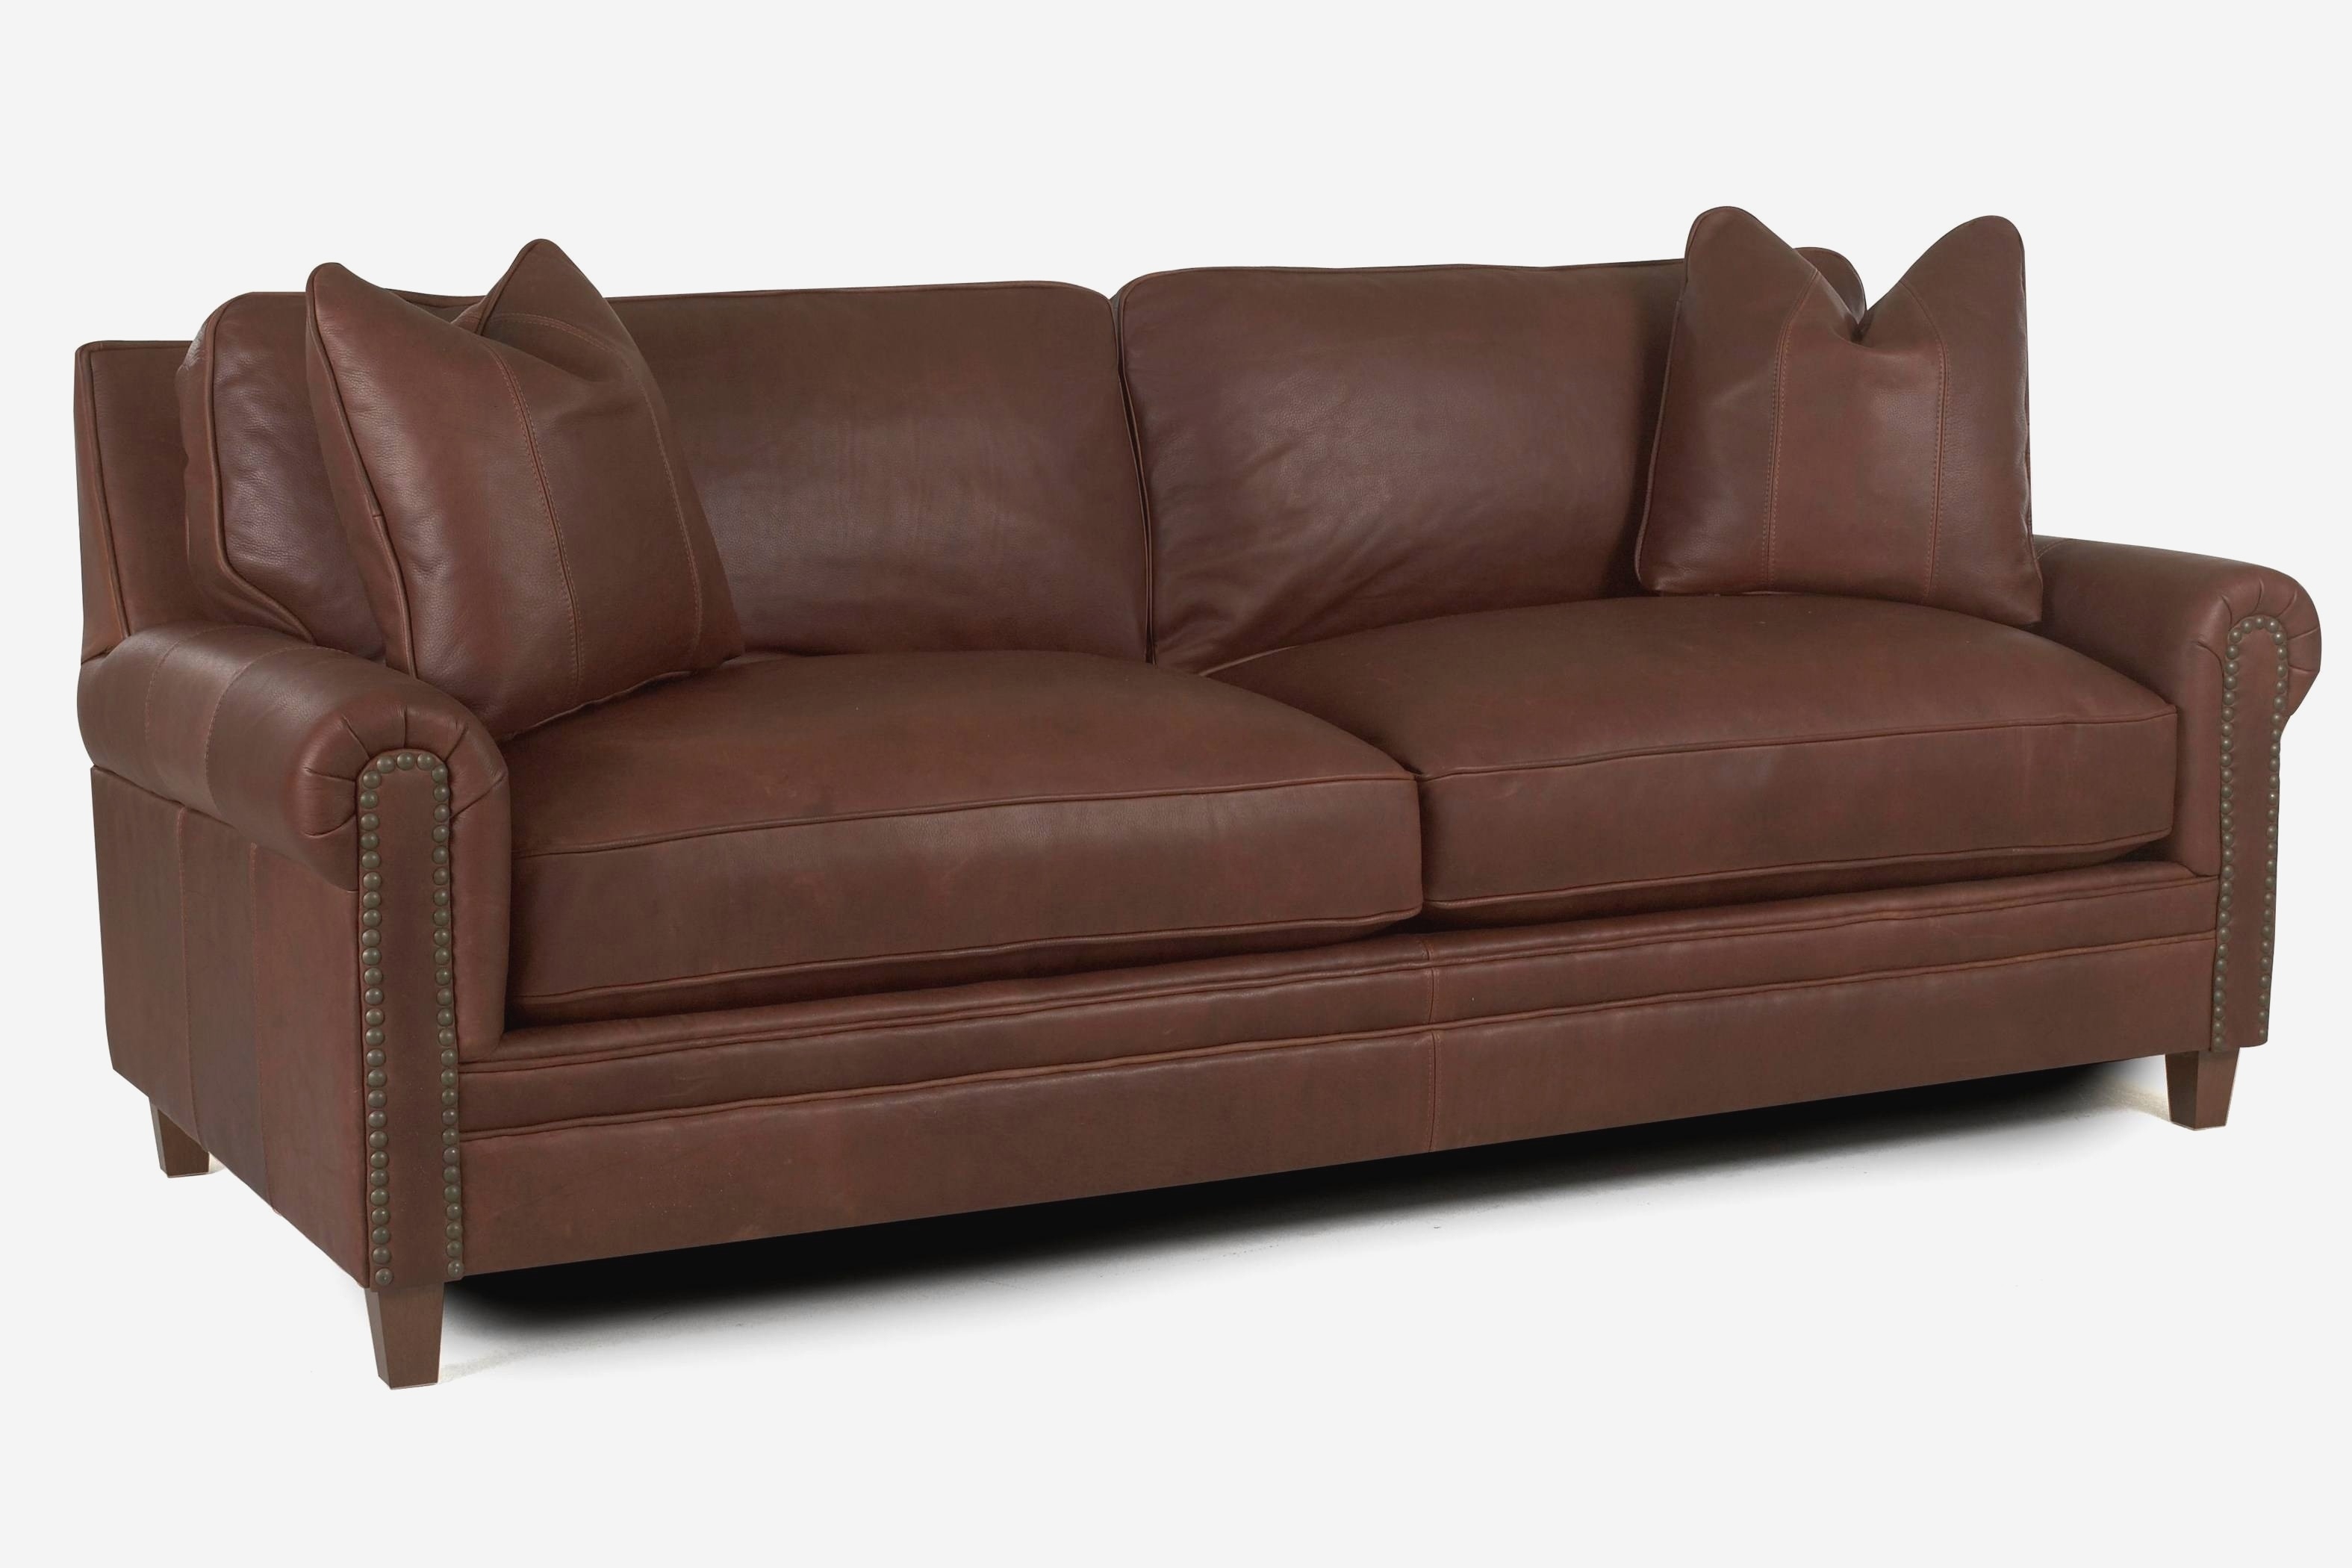 sears leather sofa beds